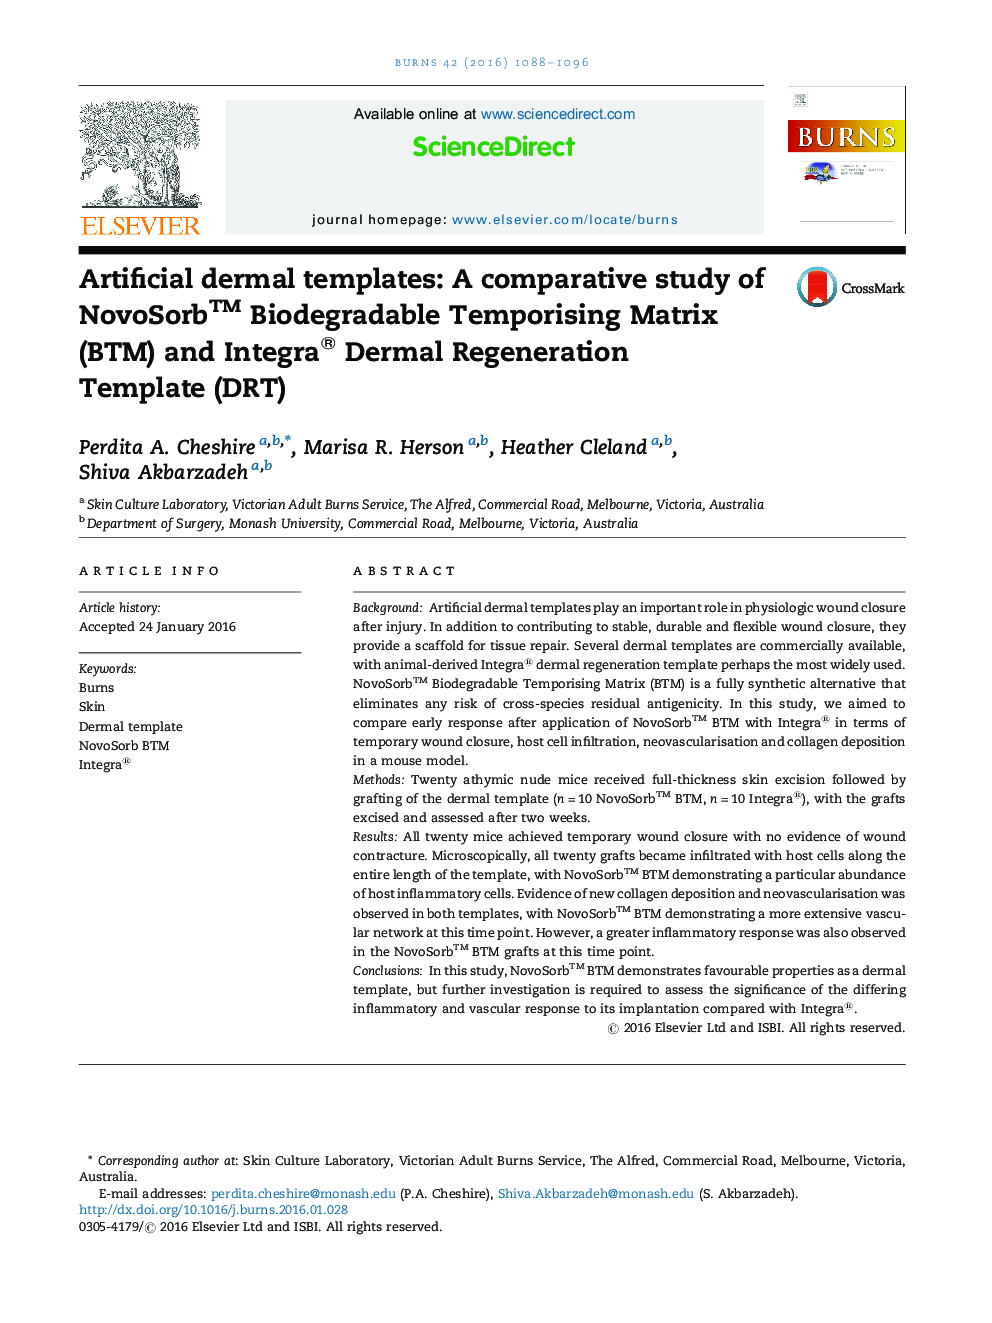 Artificial dermal templates: A comparative study of NovoSorb™ Biodegradable Temporising Matrix (BTM) and Integra® Dermal Regeneration Template (DRT)